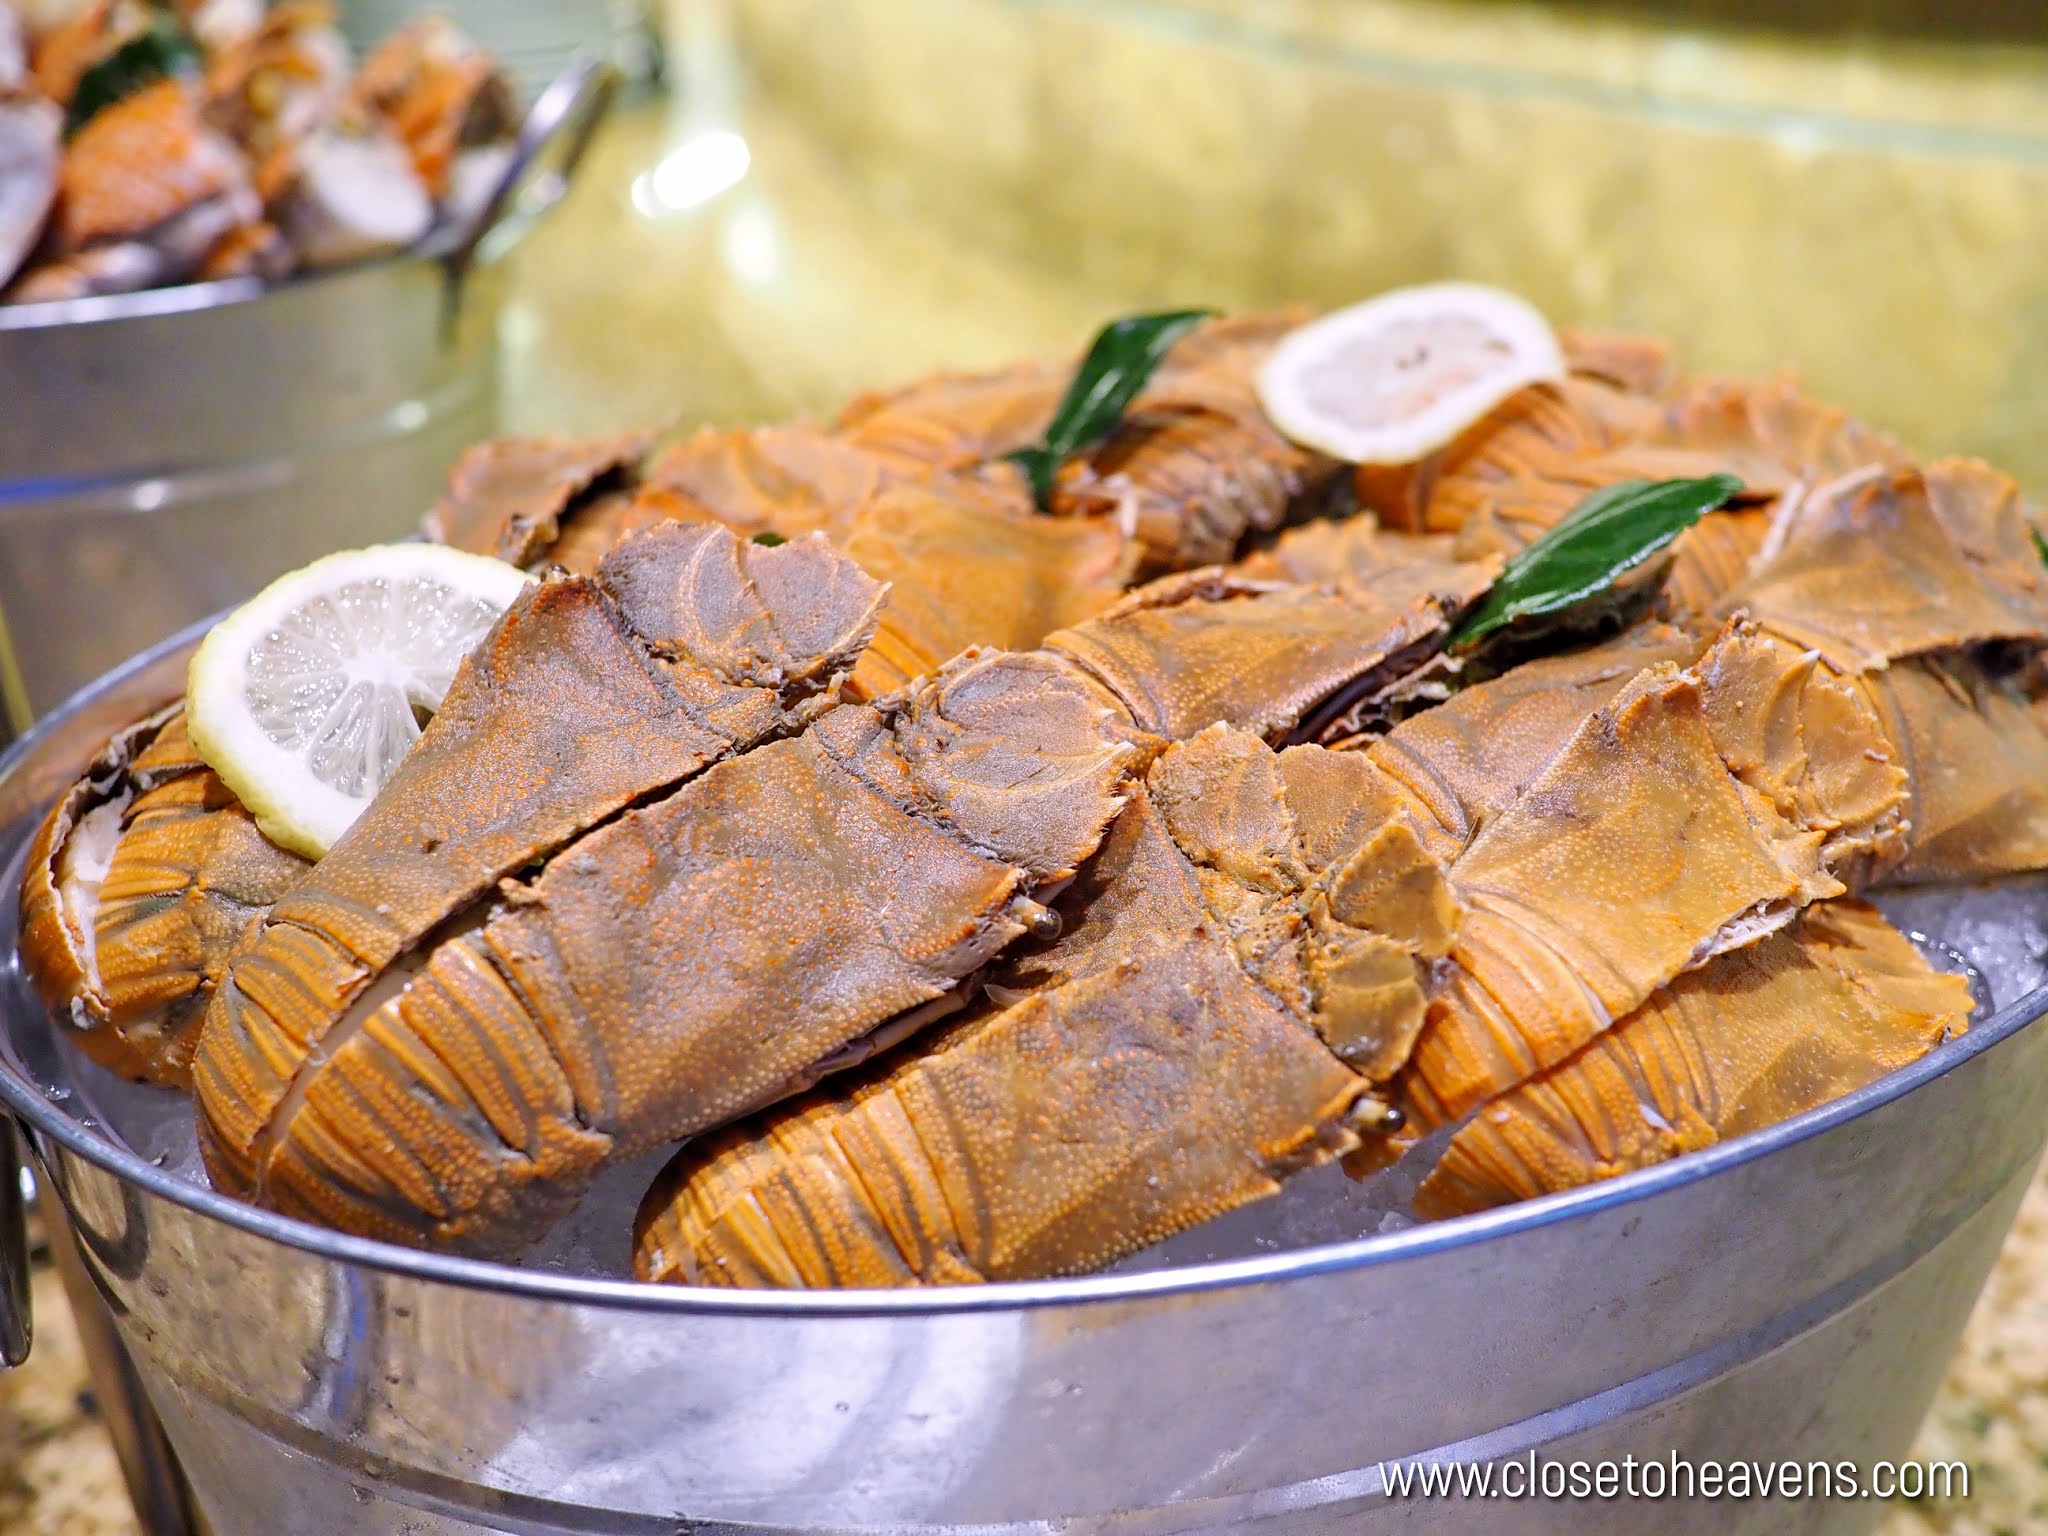 Sheraton Grande Sukhumvit | Weekend Grande Seafood Dinner Buffet